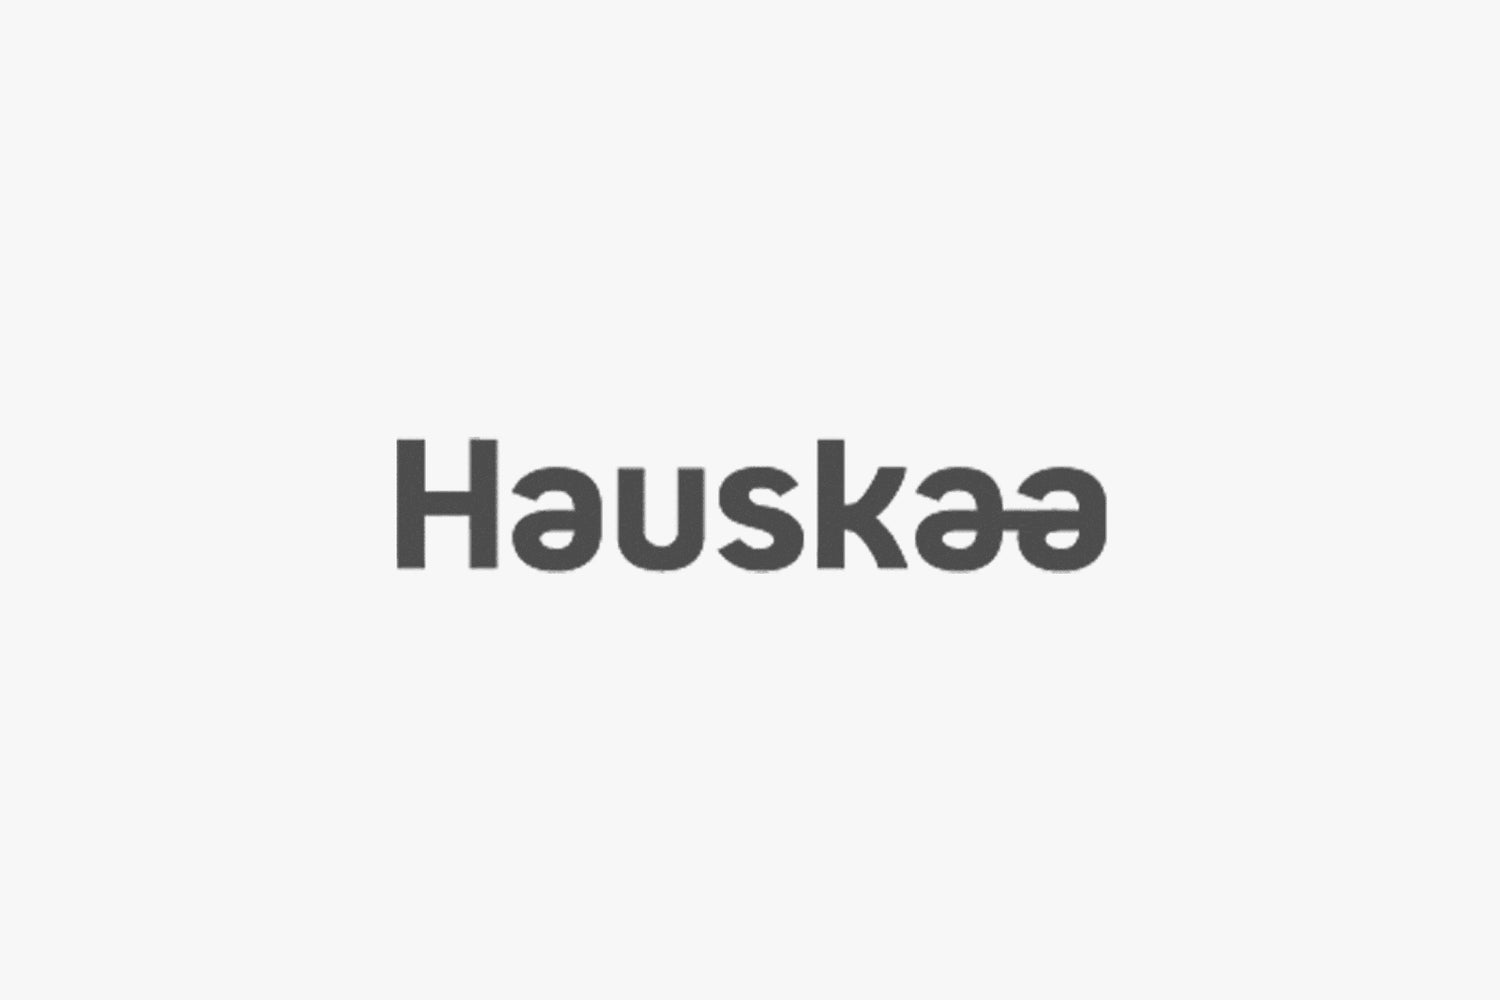 Hauskaa | ハウスカ